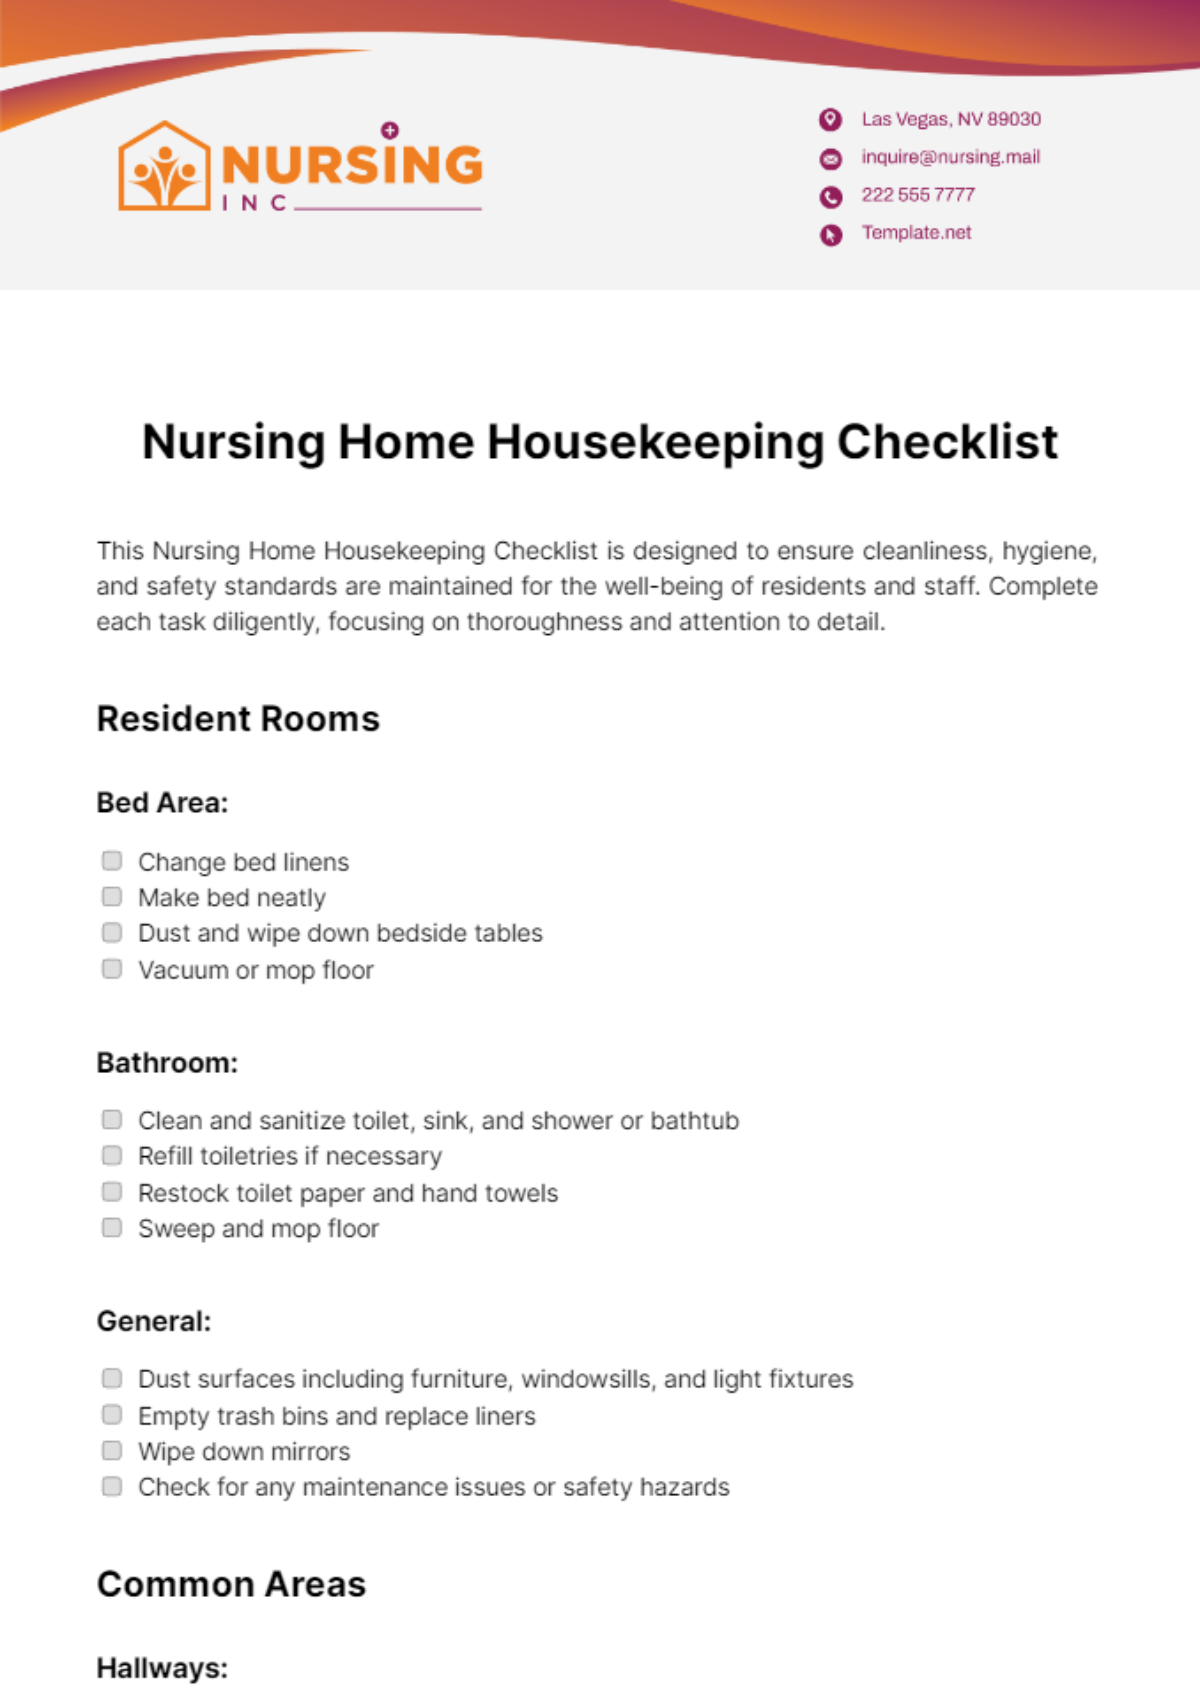 Nursing Home Housekeeping Checklist Template